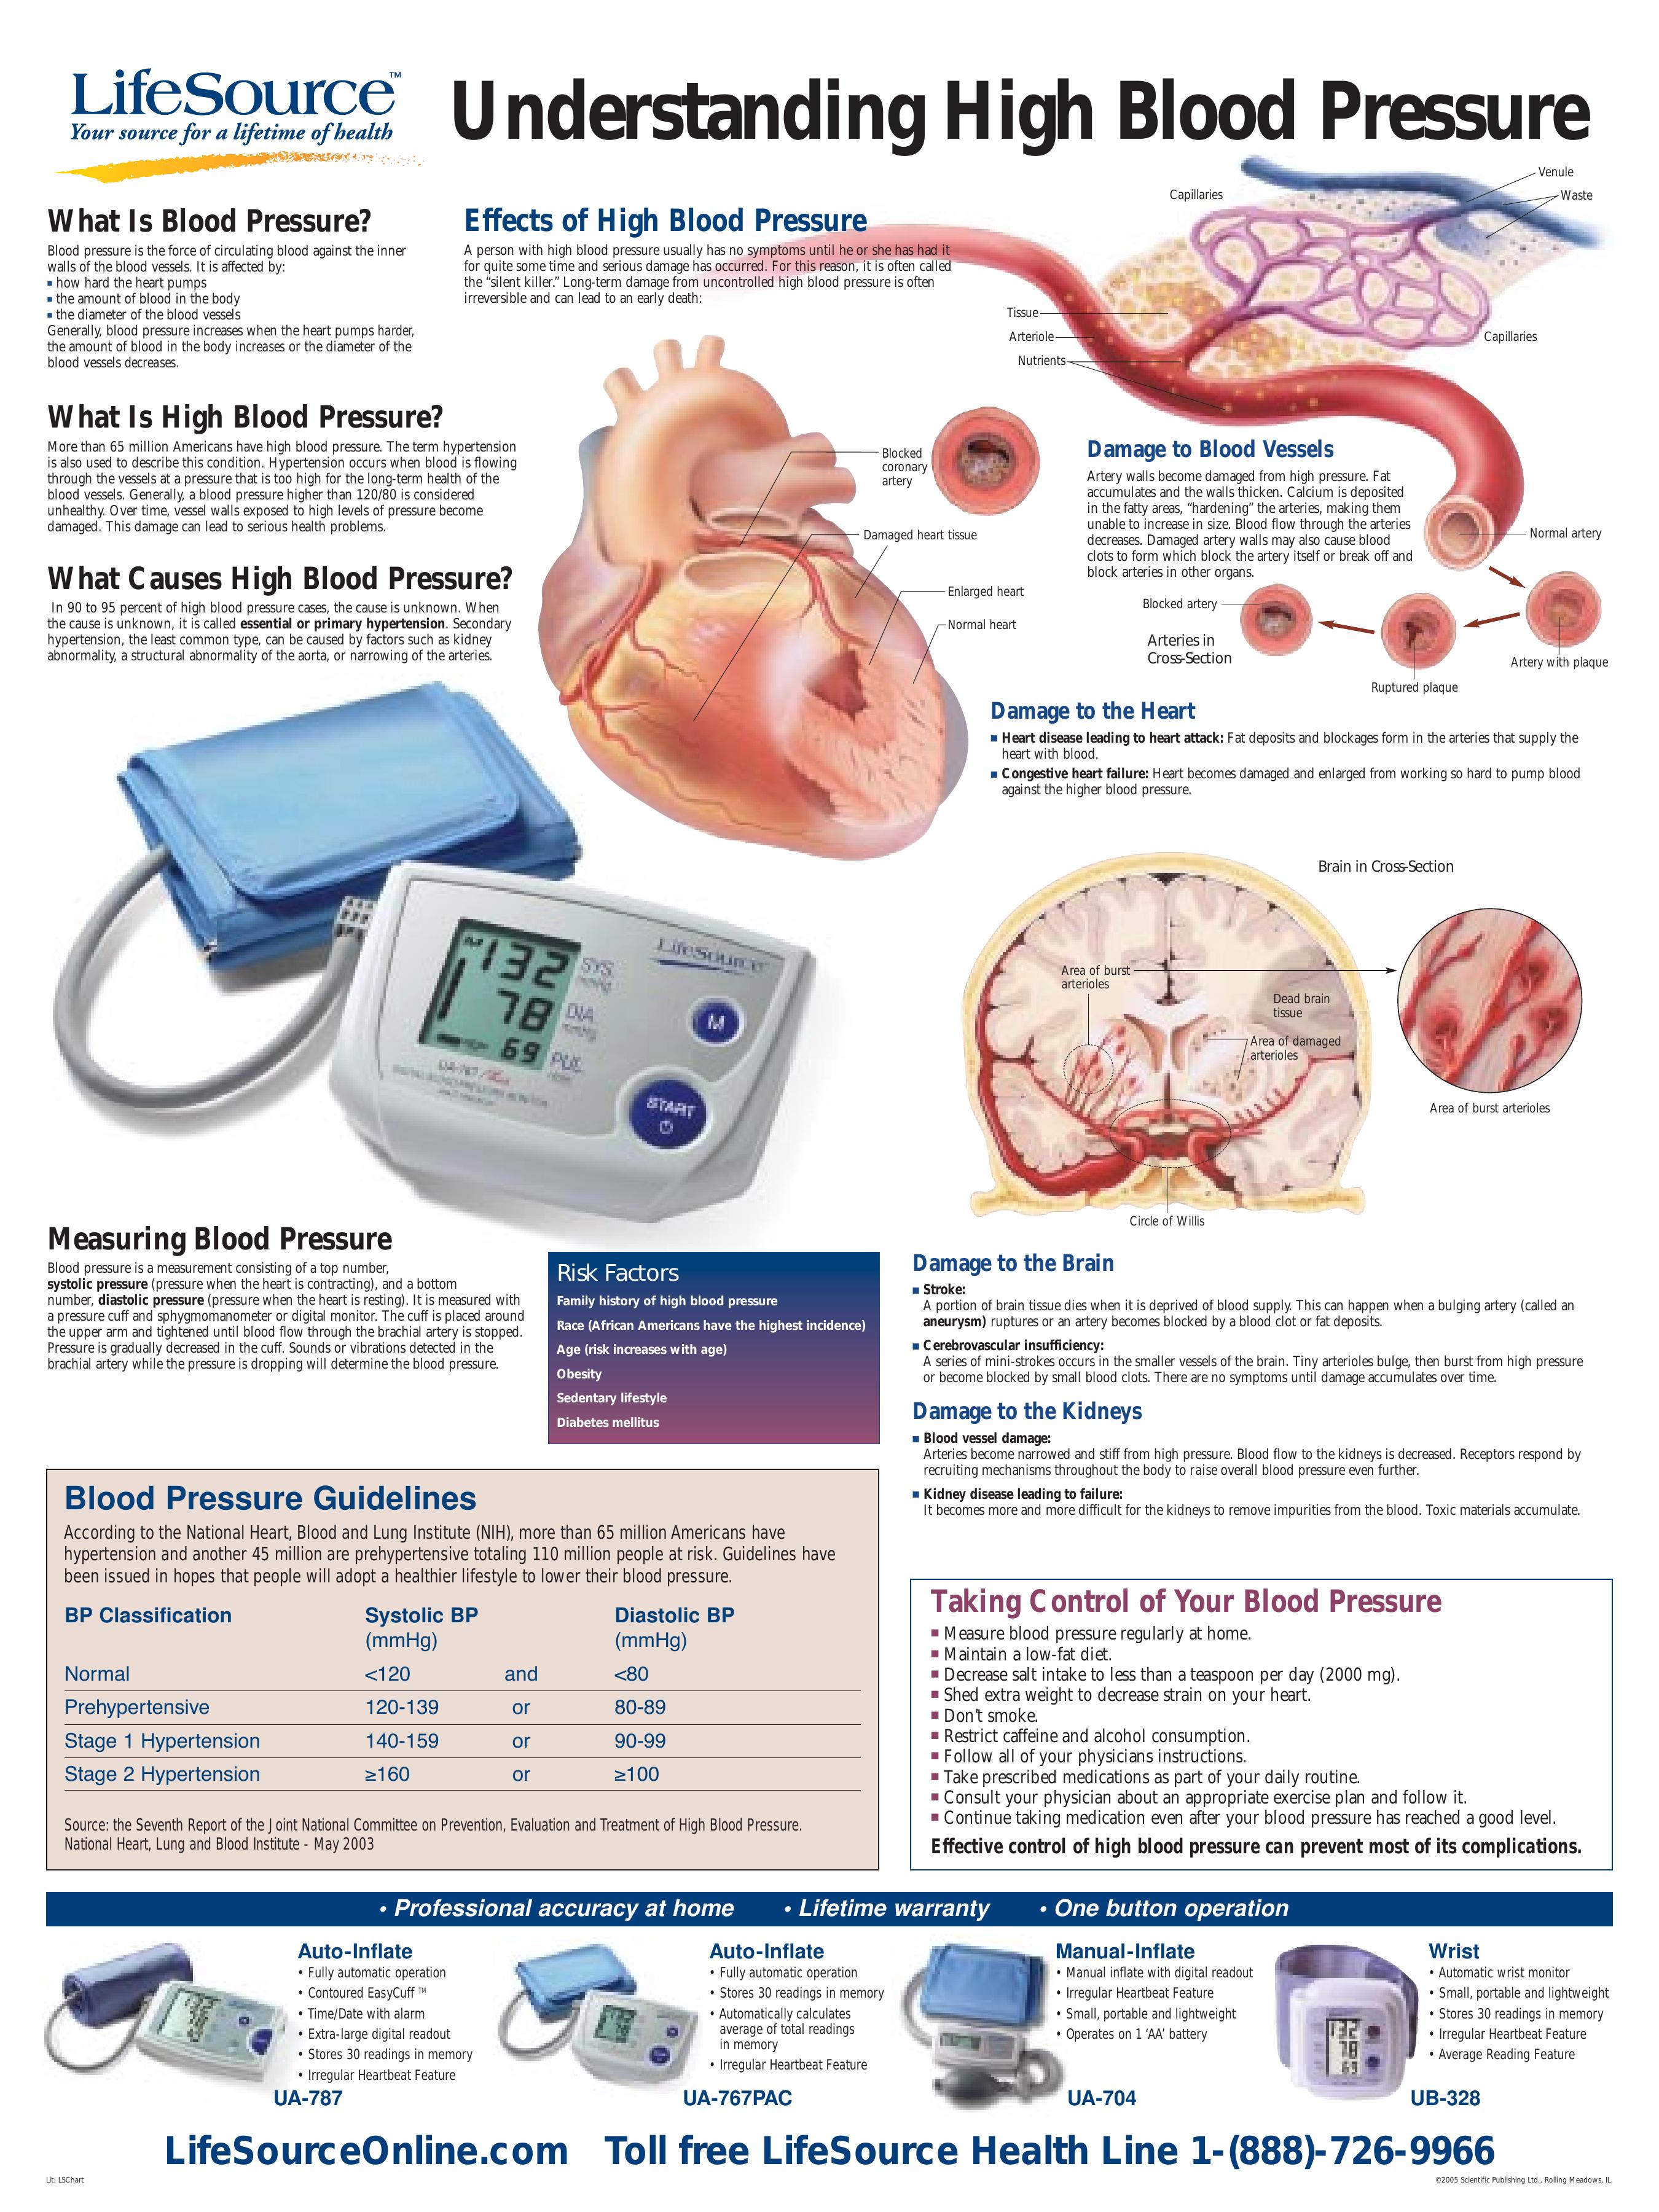 LifeSource UA-787 Blood Pressure Monitor User Manual